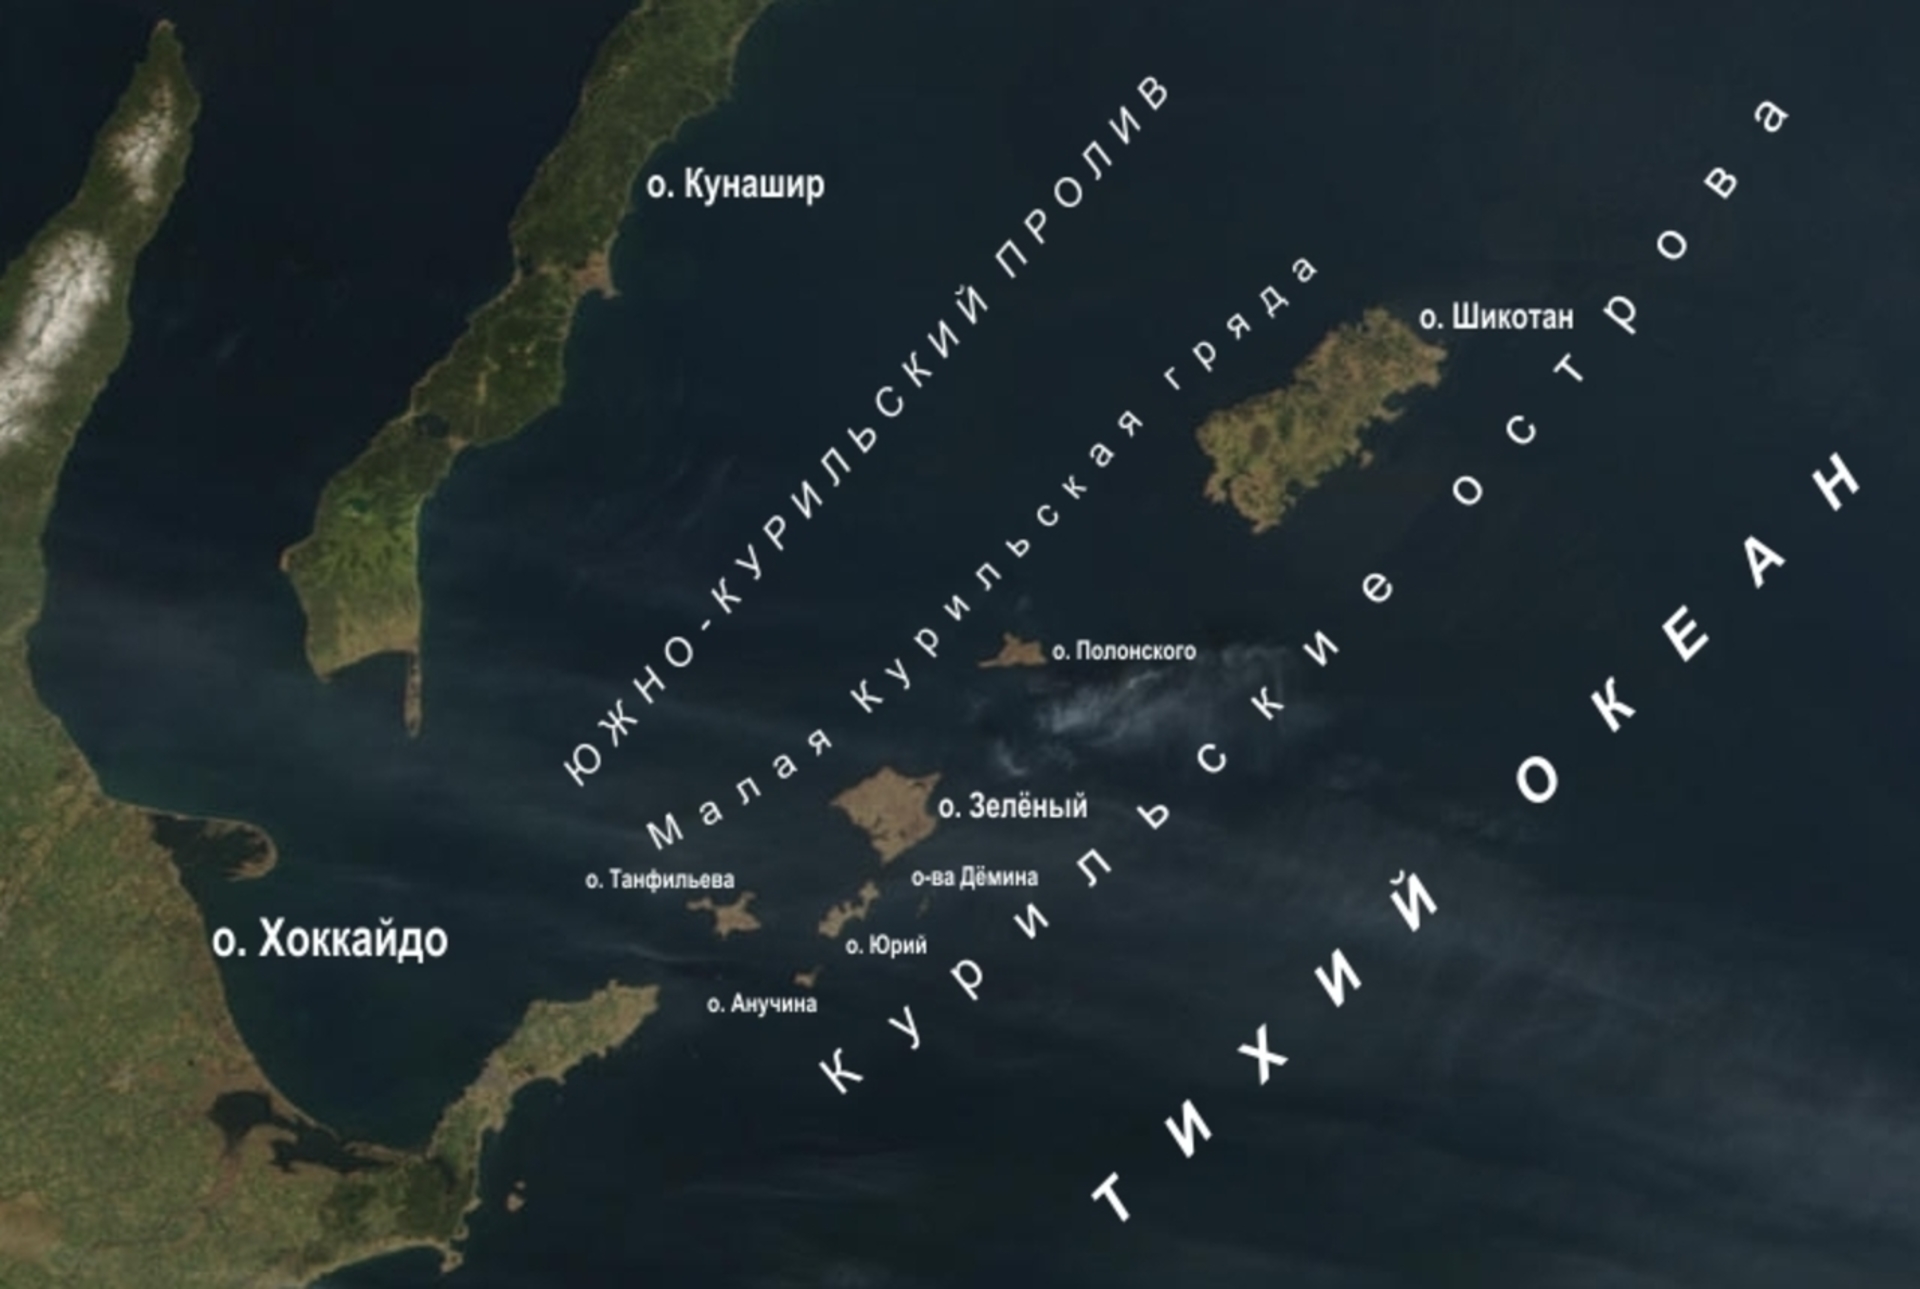 курильские острова на карте мира